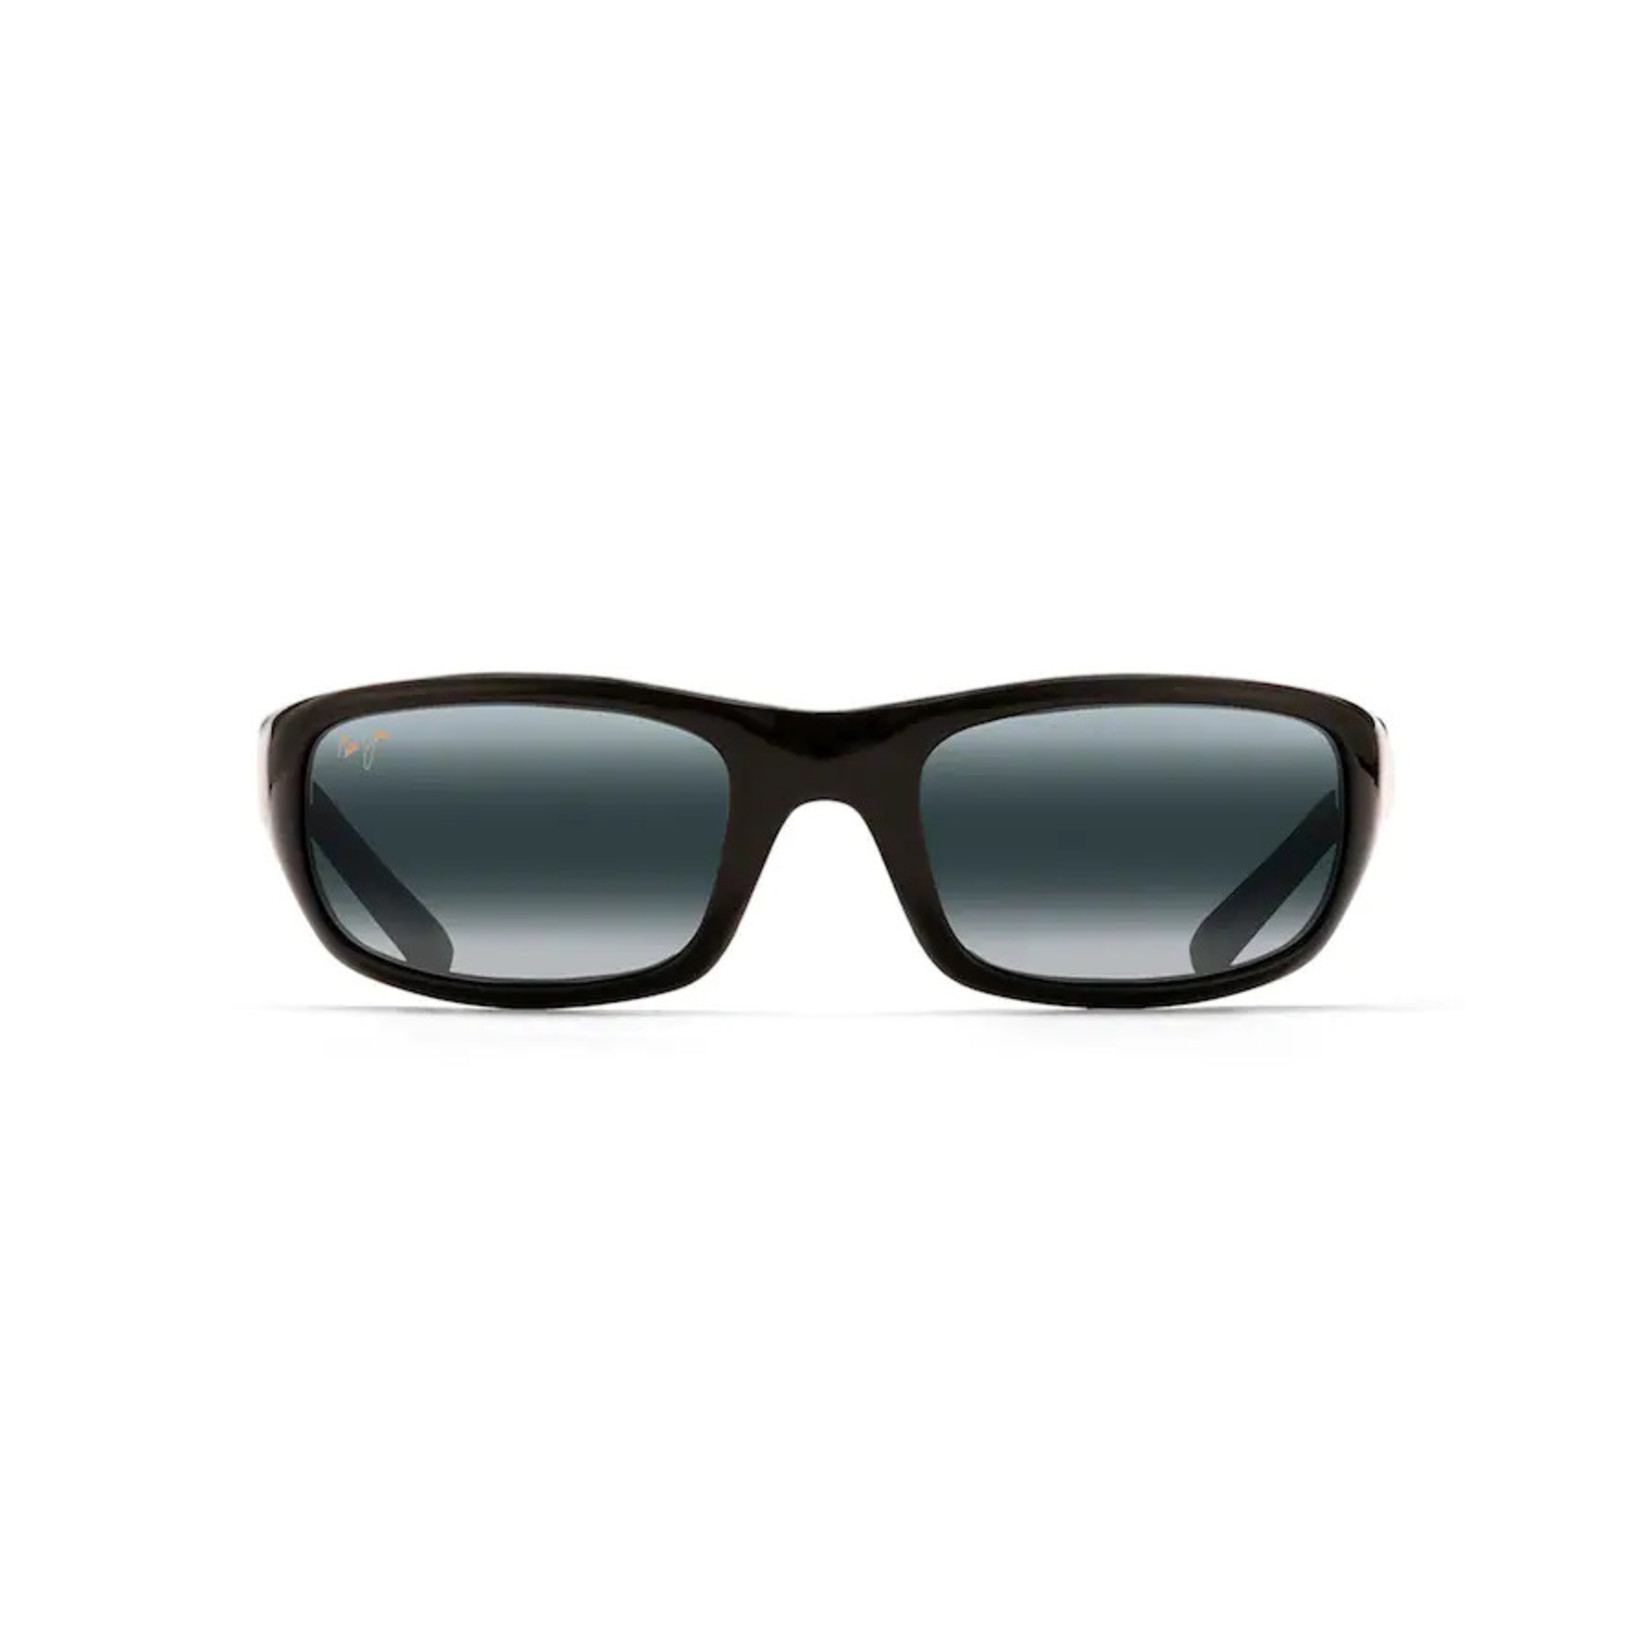 Maui Jim Stingray Polarized Sunglasses in Black Gloss